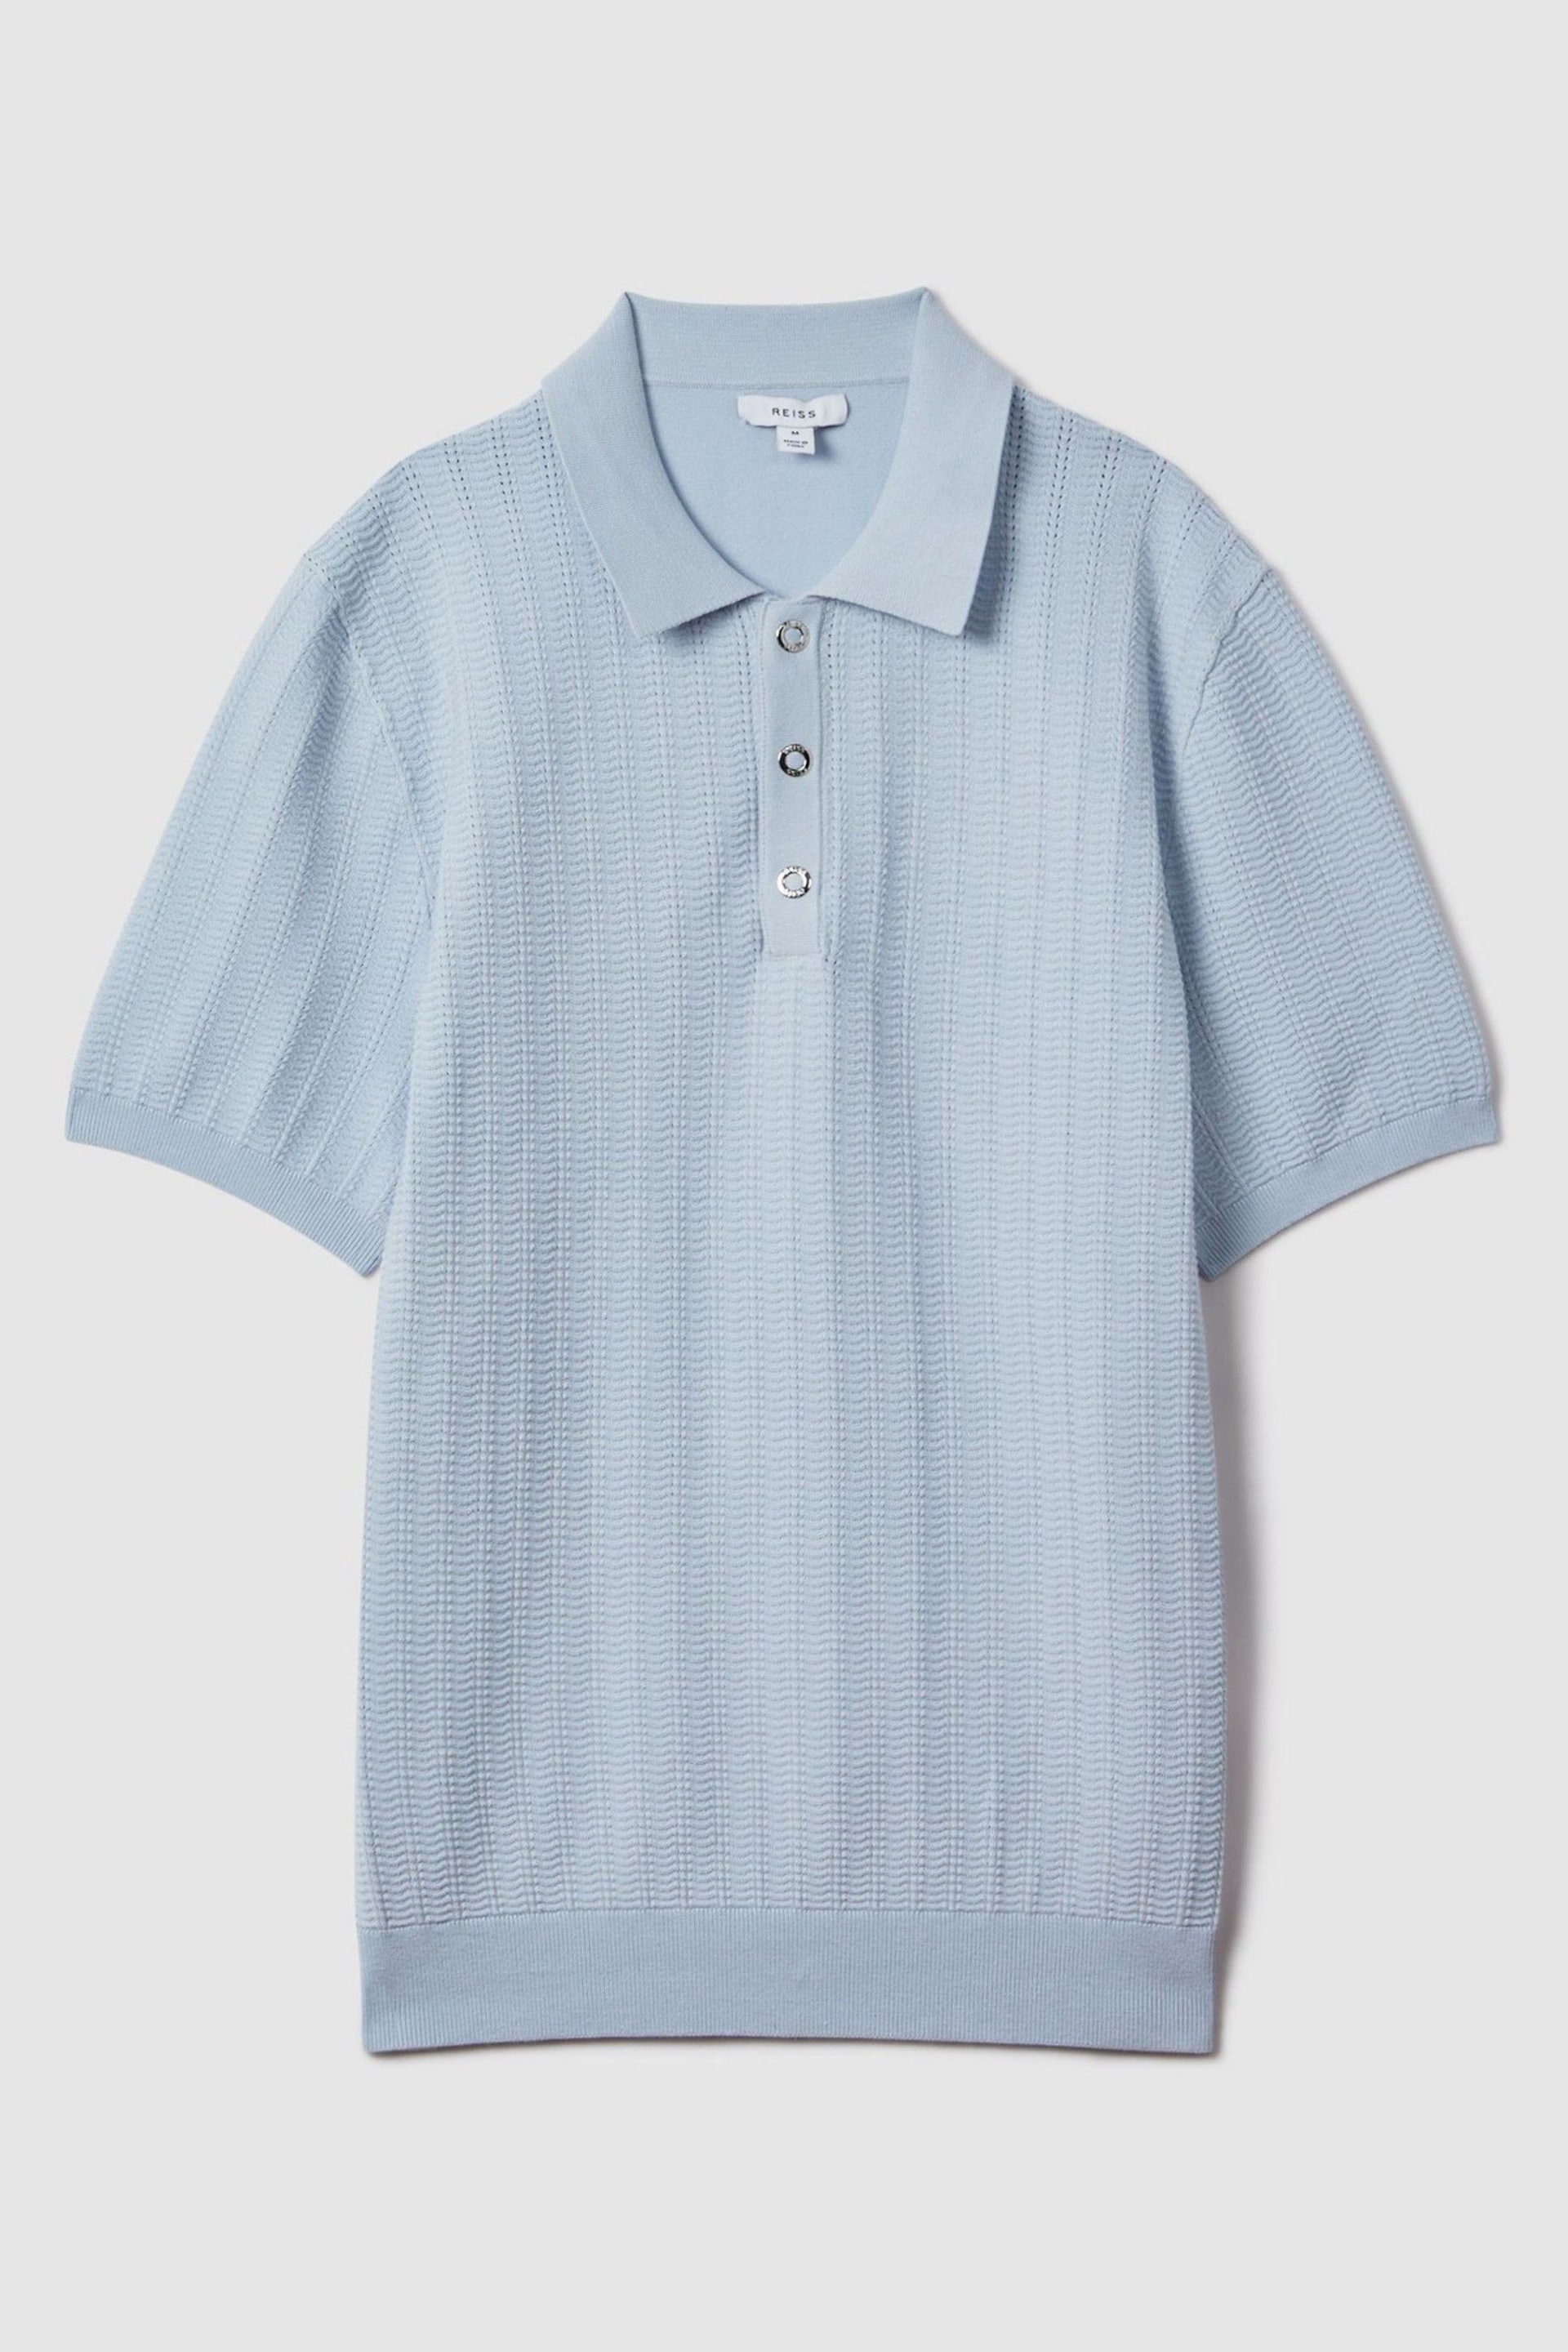 Reiss Soft Blue Pascoe Textured Modal Blend Polo Shirt - Image 2 of 7